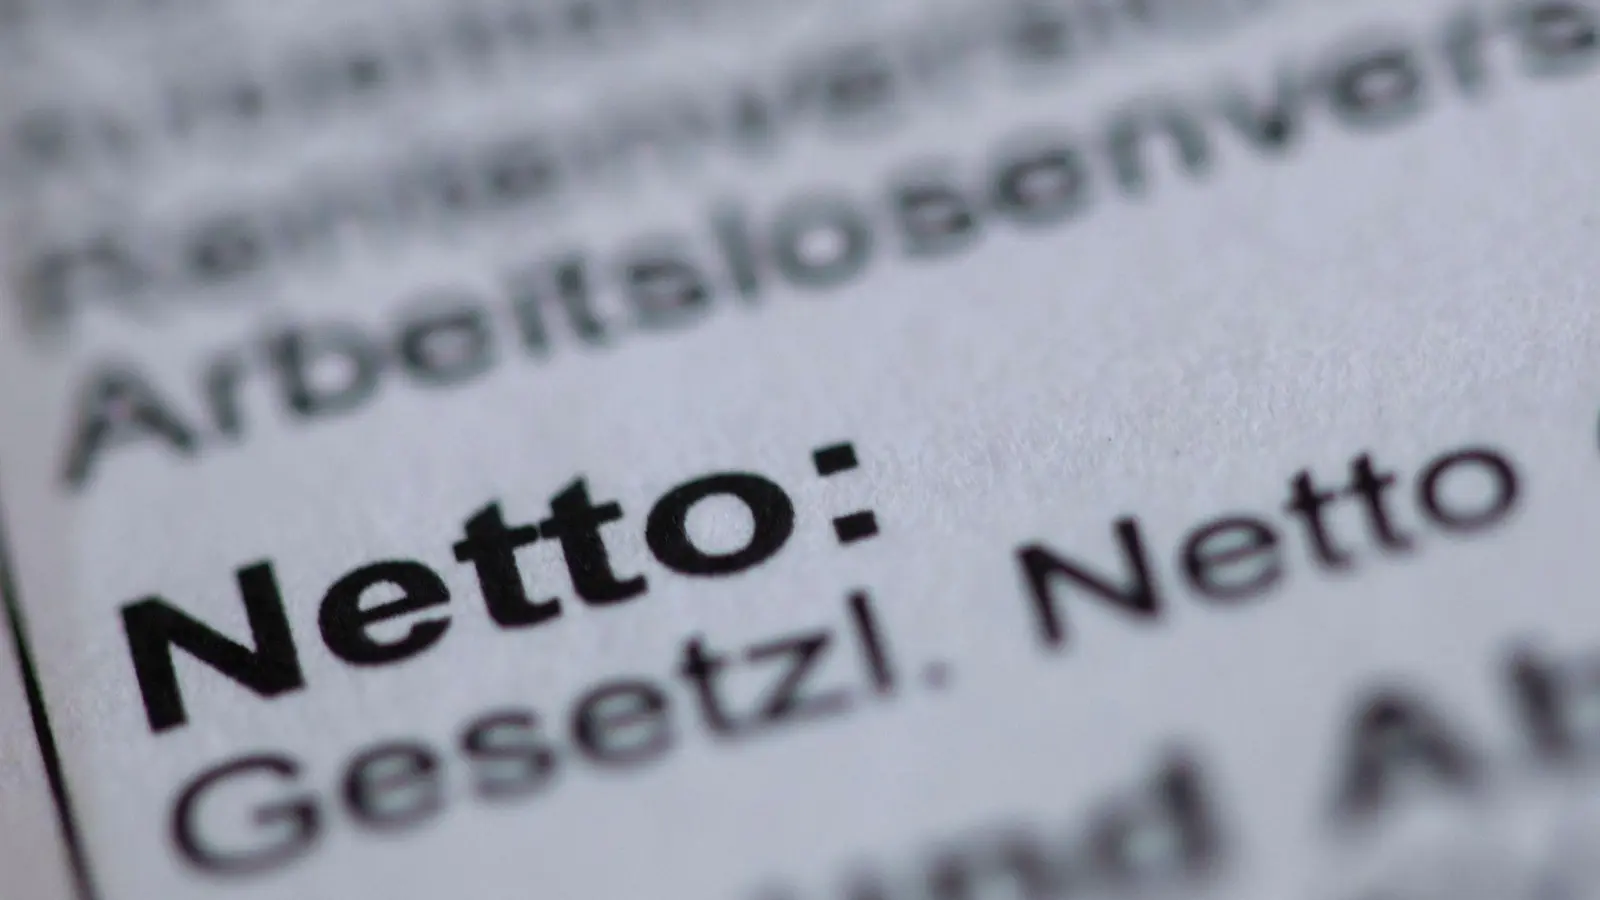 Entdeckt man im Netto-Auszahlungsbetrag einen Fehler, sollte man sich direkt an den Arbeitgeber wenden. (Foto: Jens Büttner/dpa-Zentralbild/dpa-tmn)